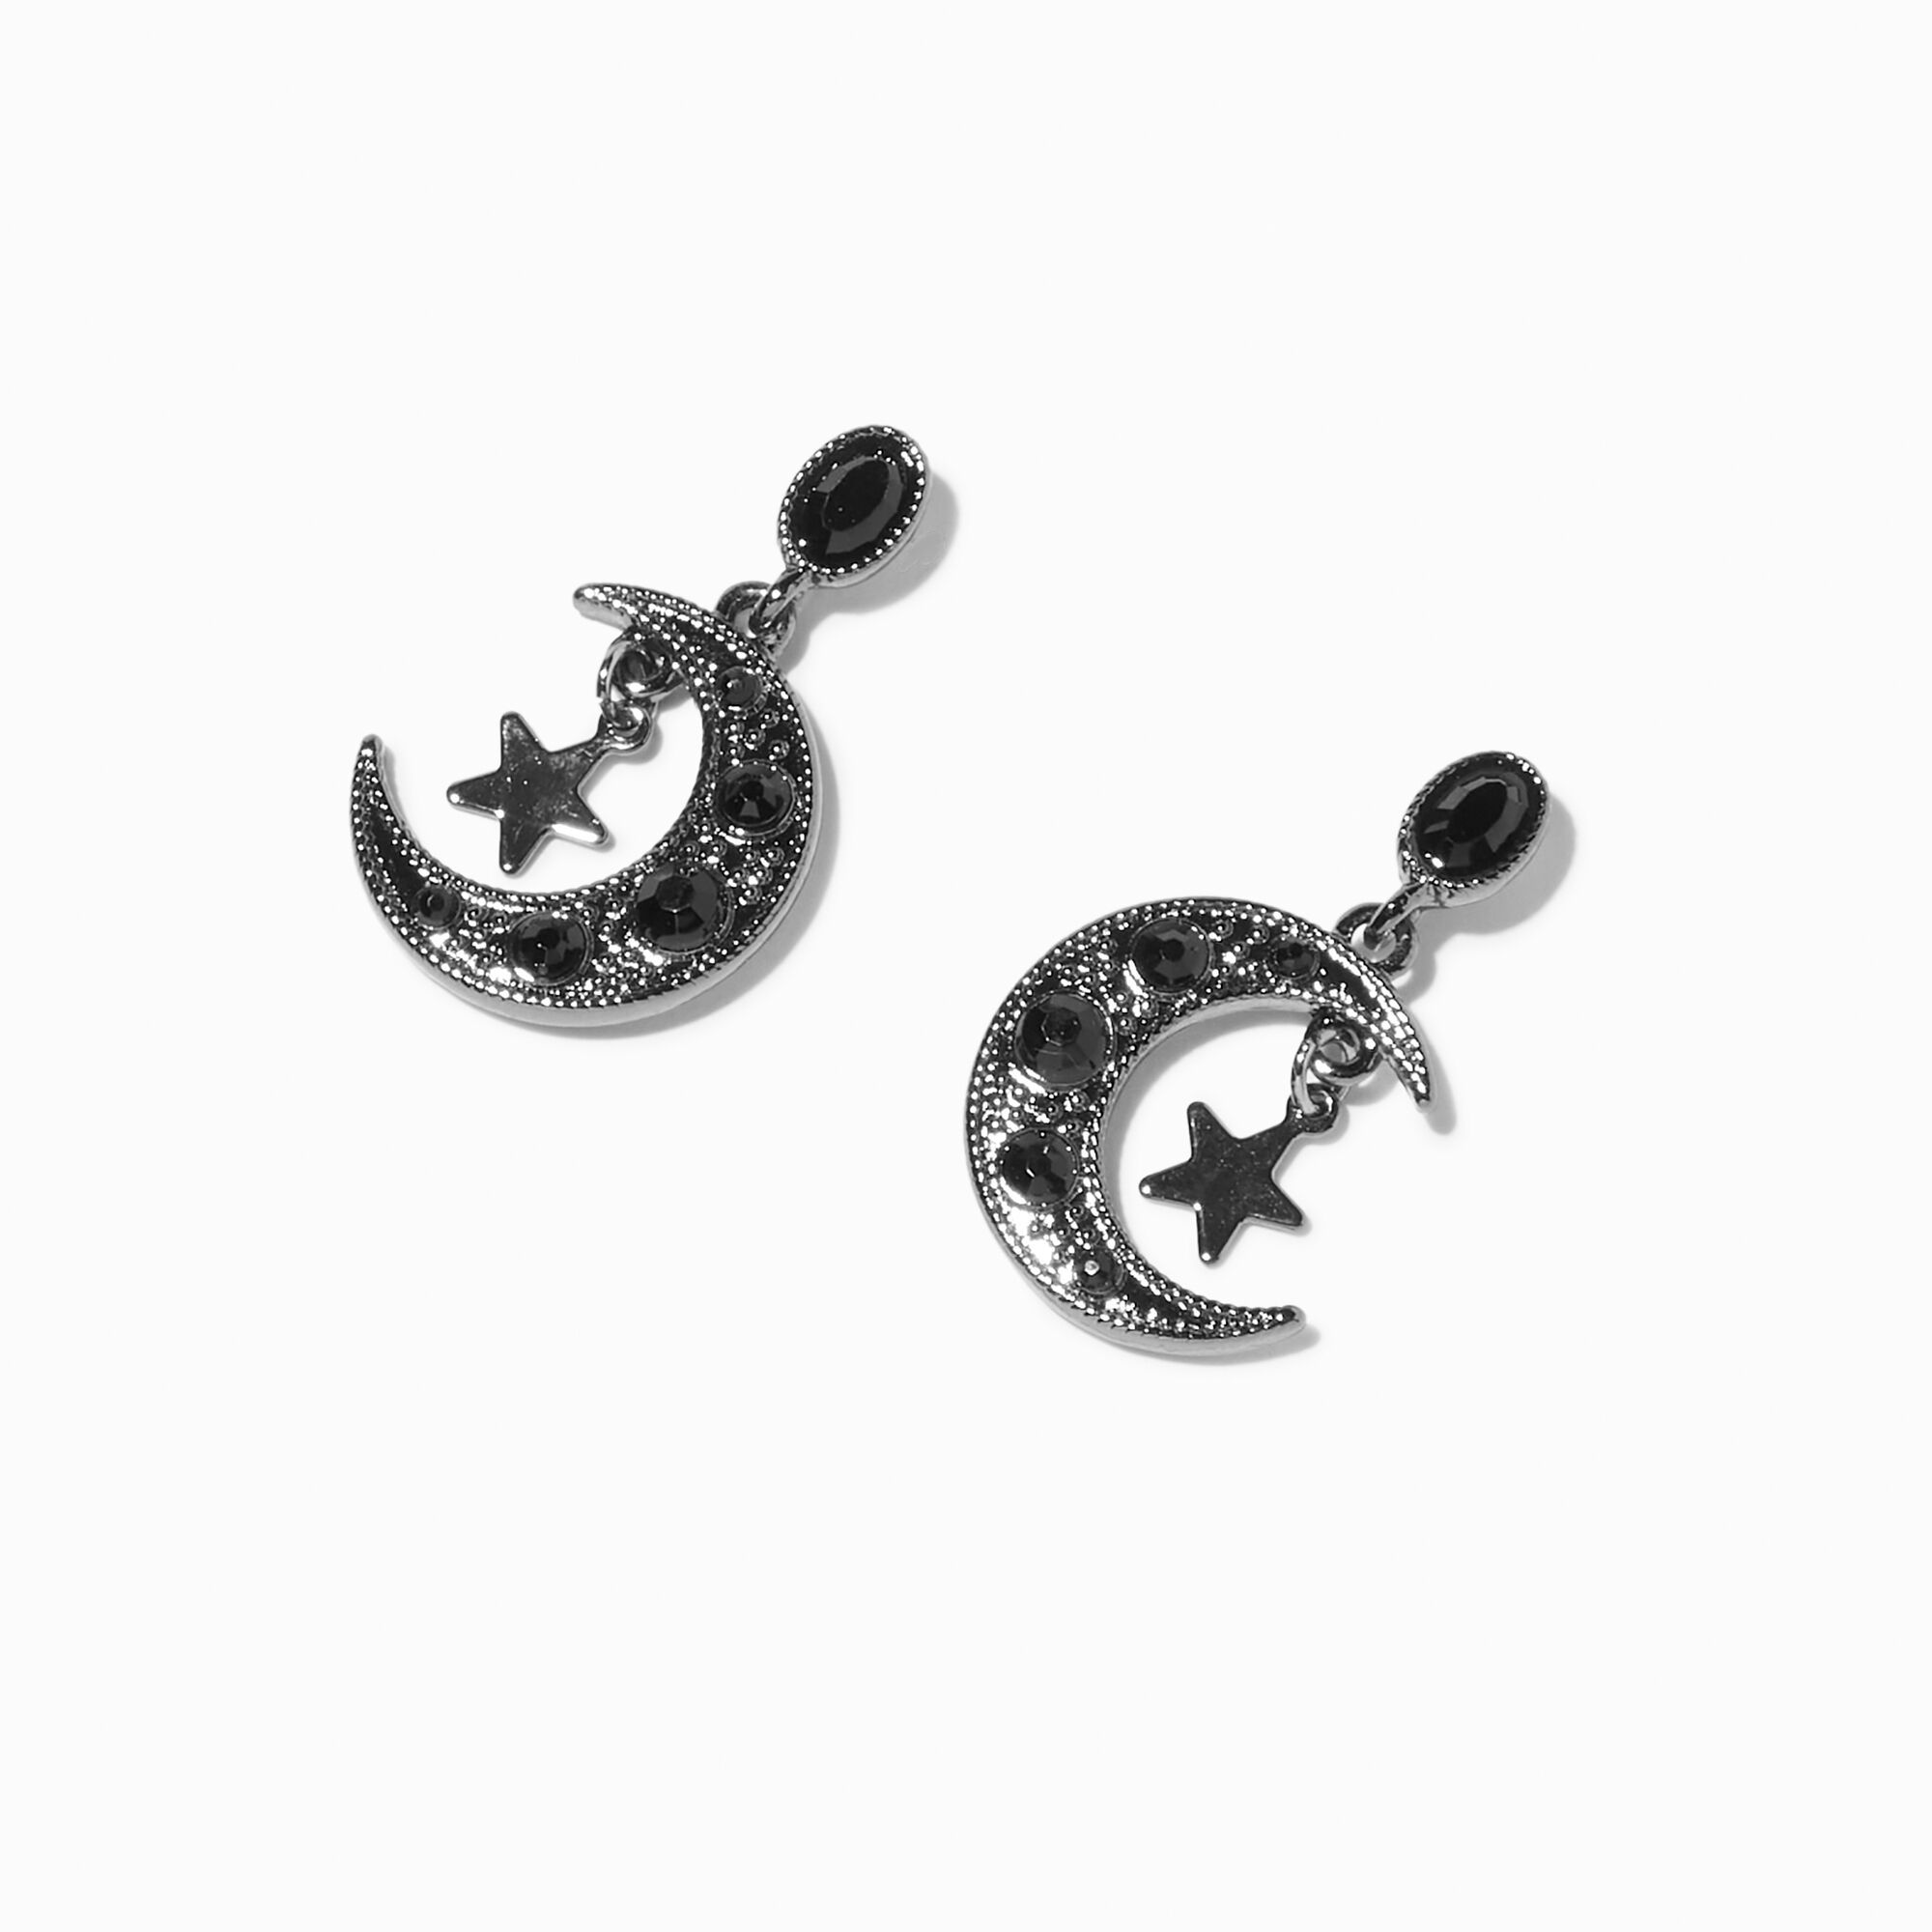 FILIGREE CRESCENT MOON SP Drop Earrings Pagan Wicca Tattoo Celestial | eBay